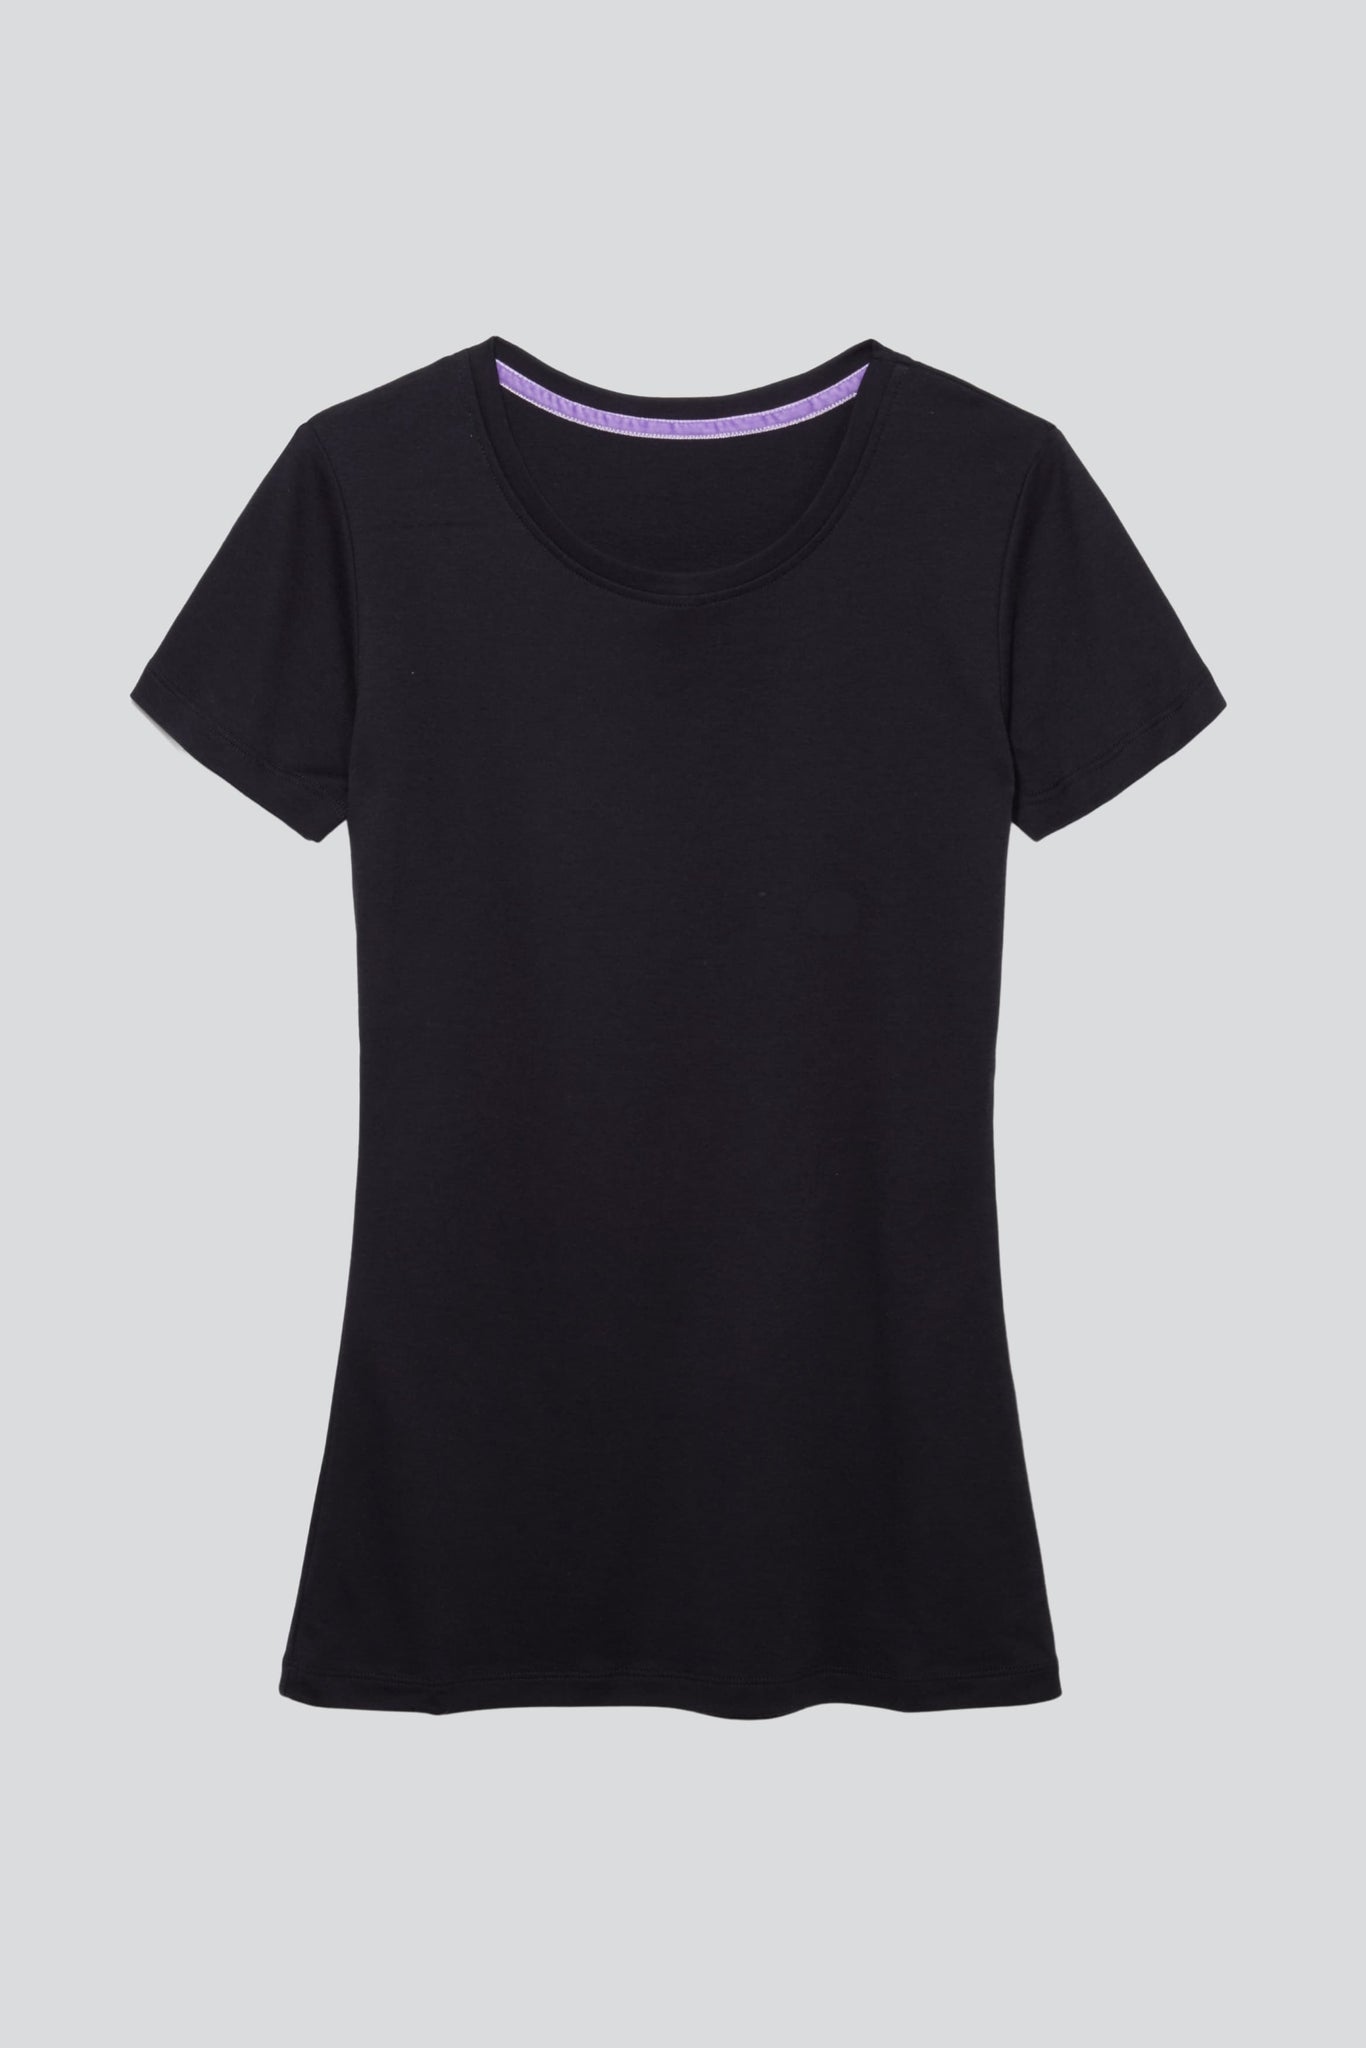 Women's Black Short Sleeve Crew Neck Cotton Modal Blend T-shirt - Short Sleeve T-shirt - Comfortable T-Shirt Lavender Hill Clothing